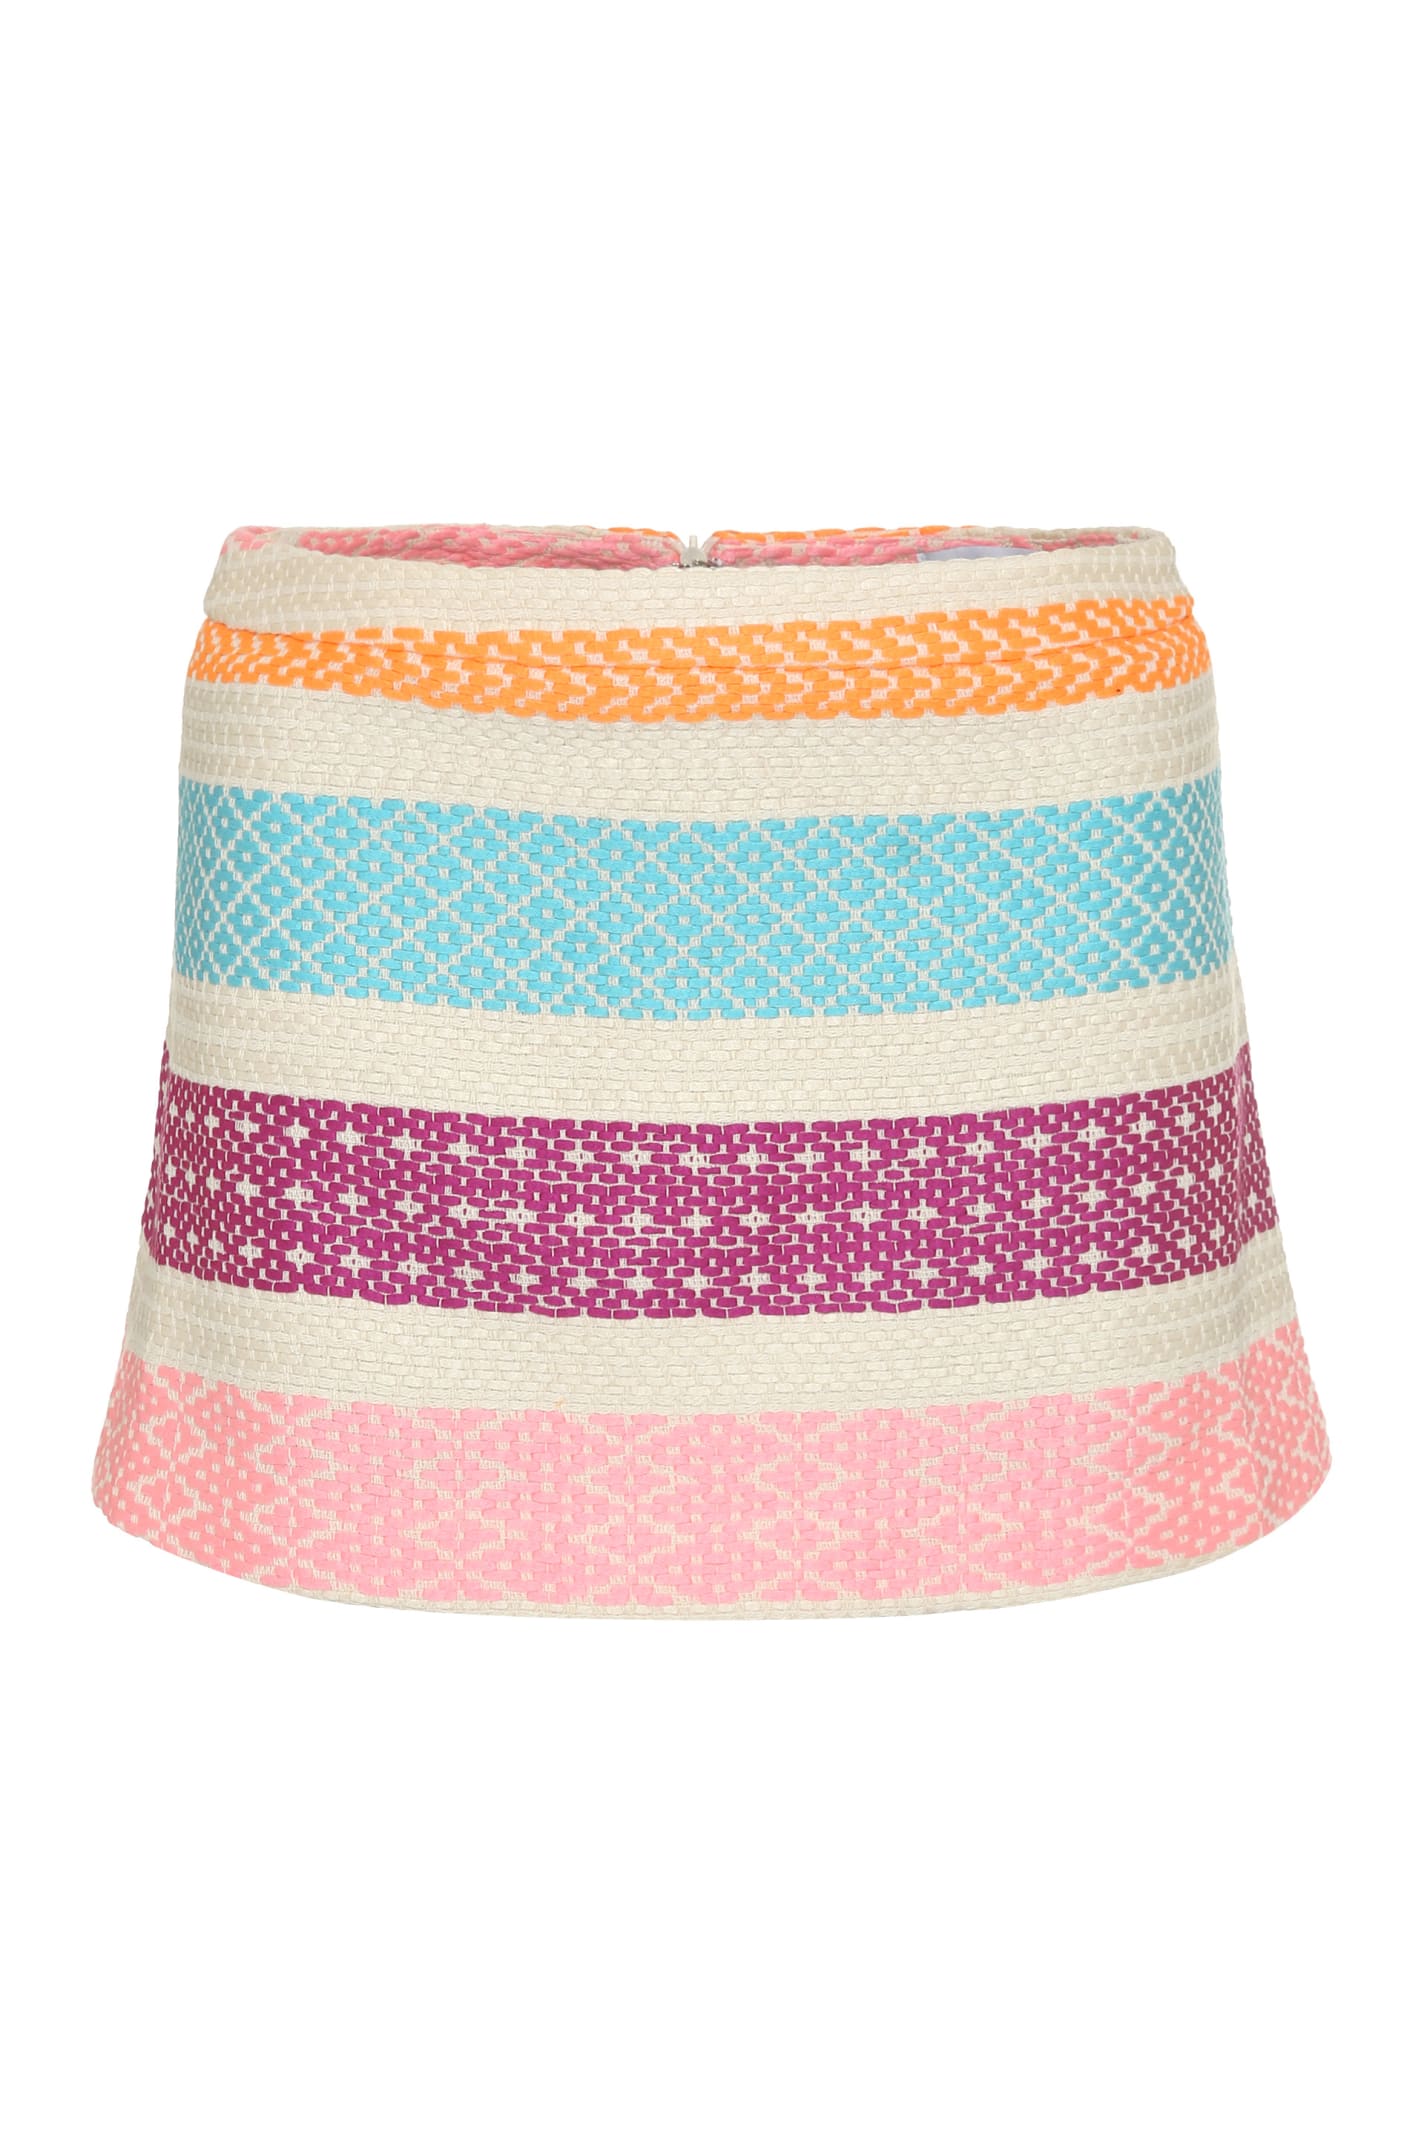 Giada Benincasa Striped Mini Skirt